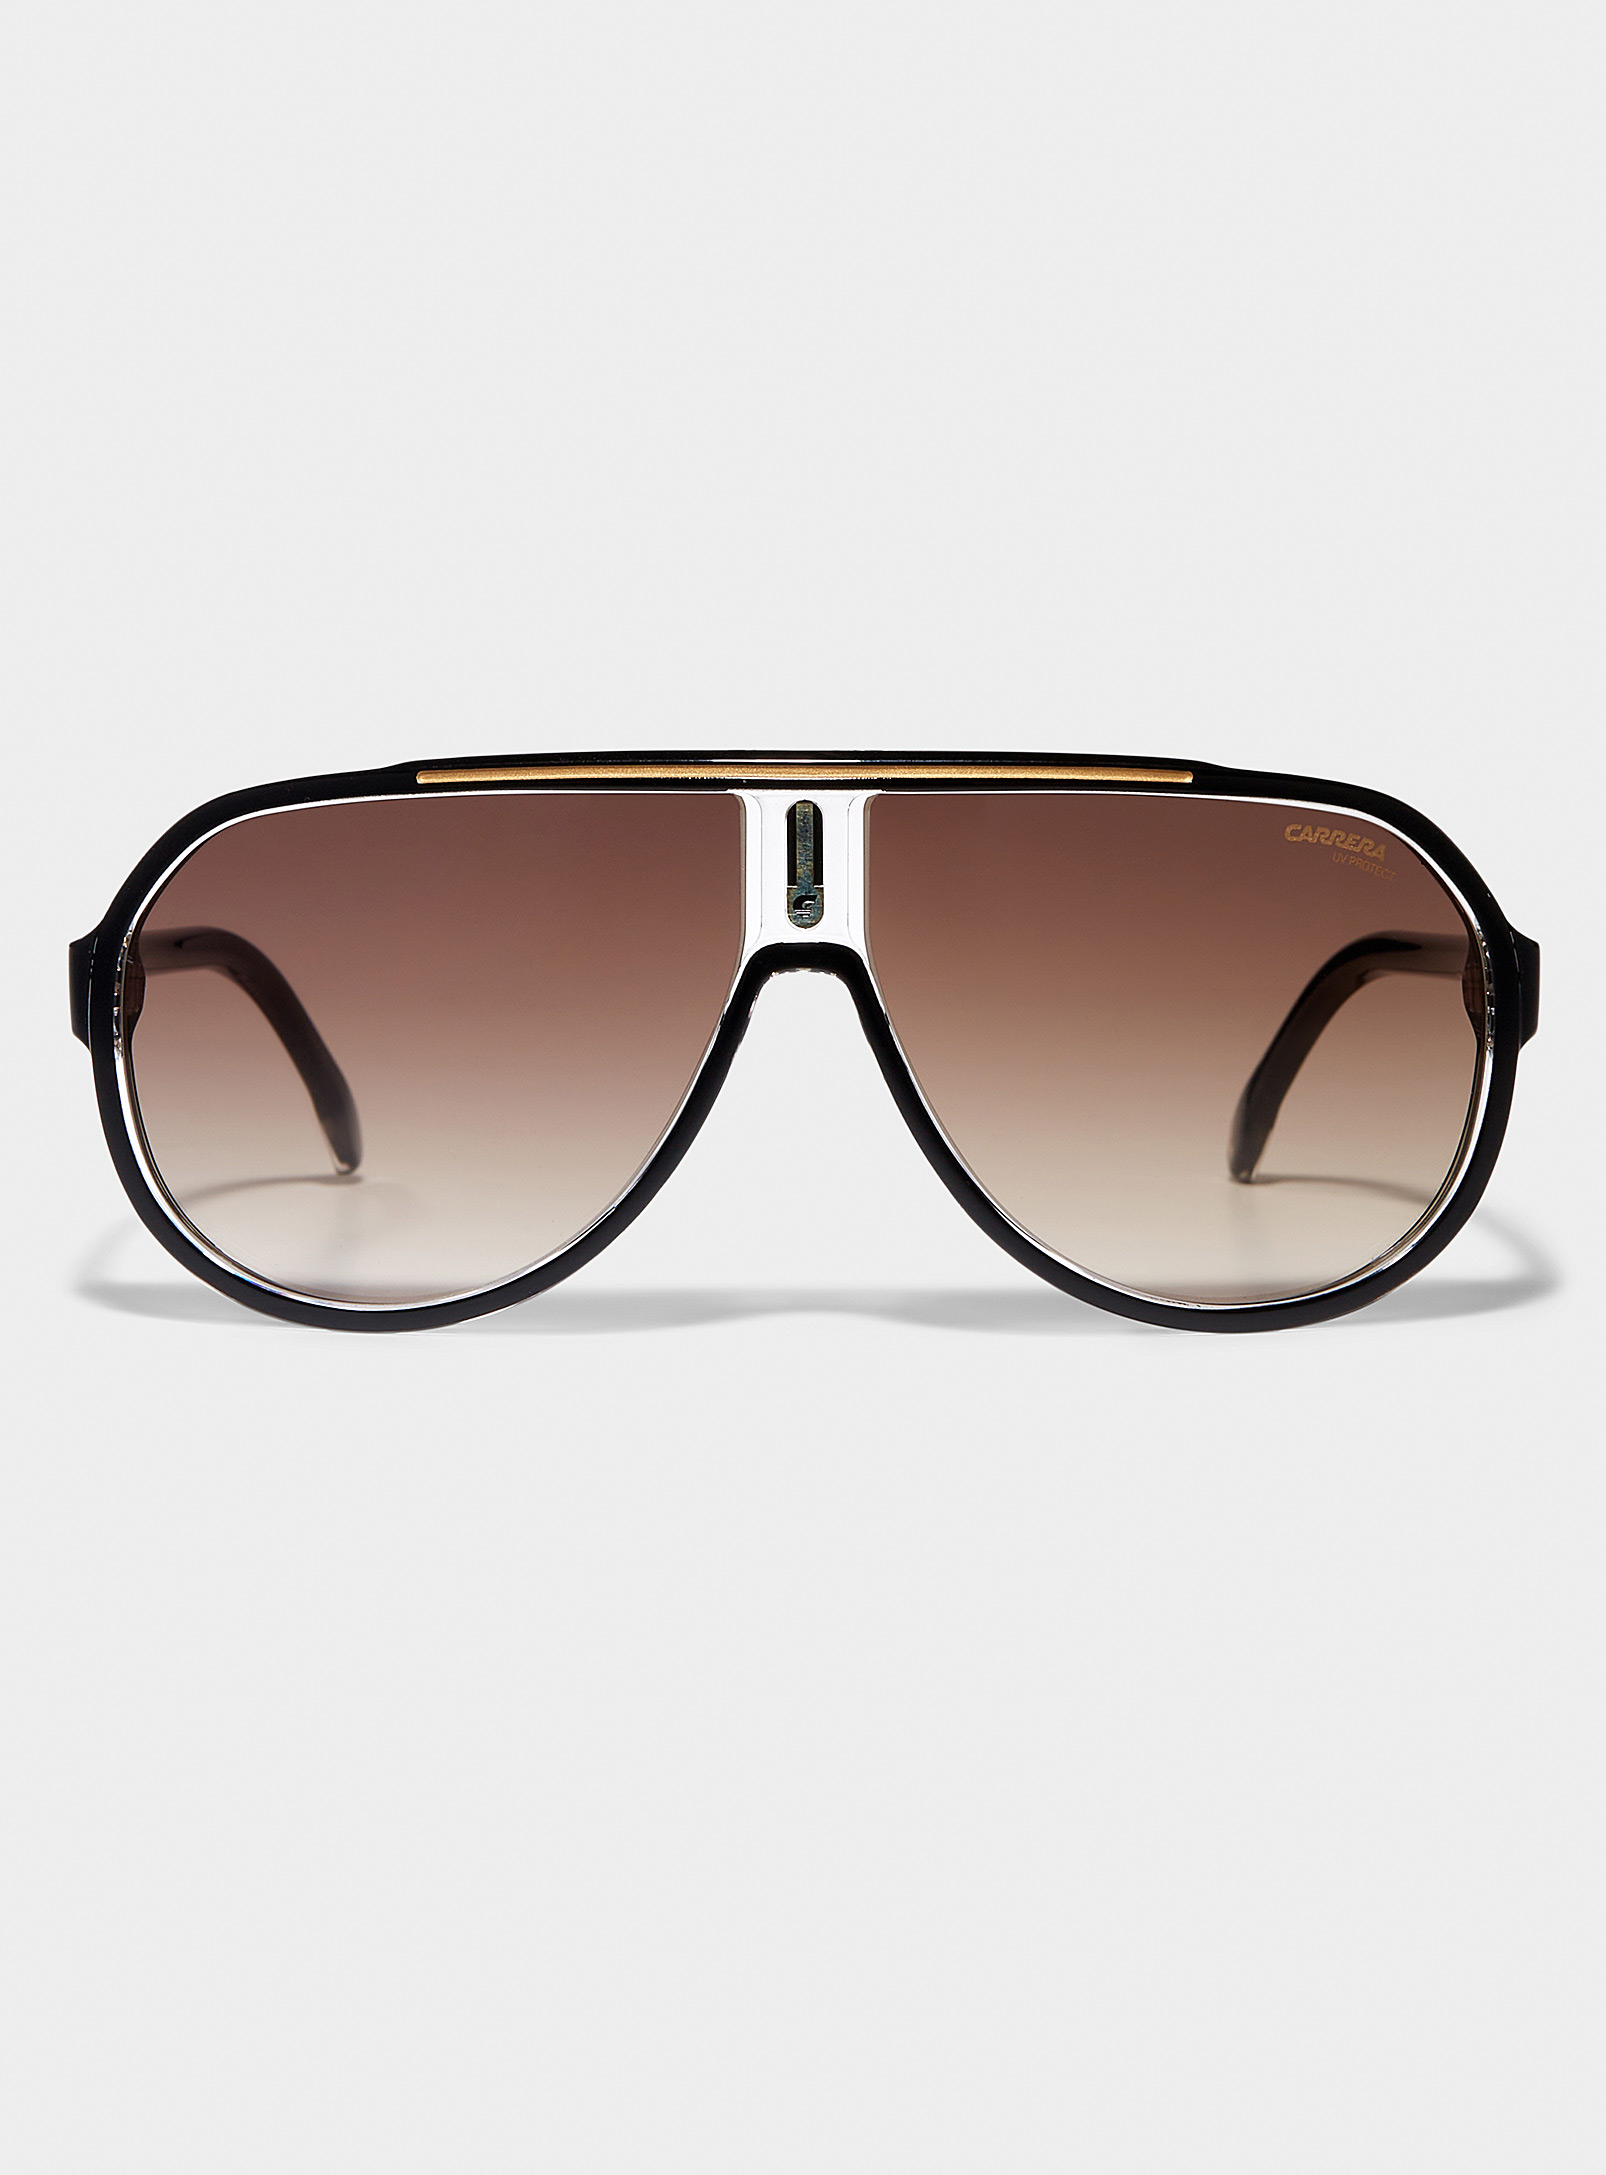 Carrera Black Aviator Sunglasses In Patterned Brown